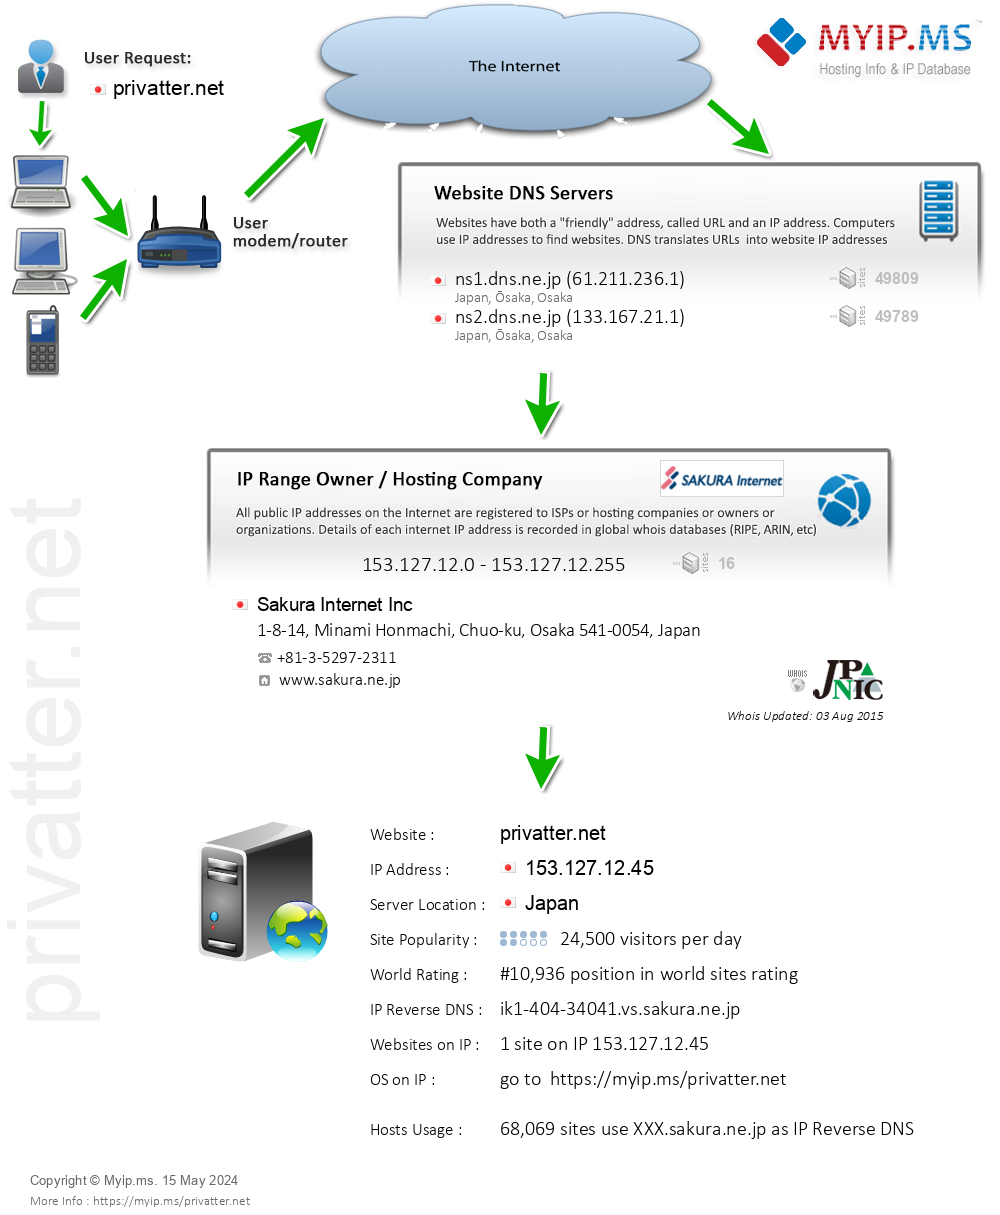 Privatter.net - Website Hosting Visual IP Diagram